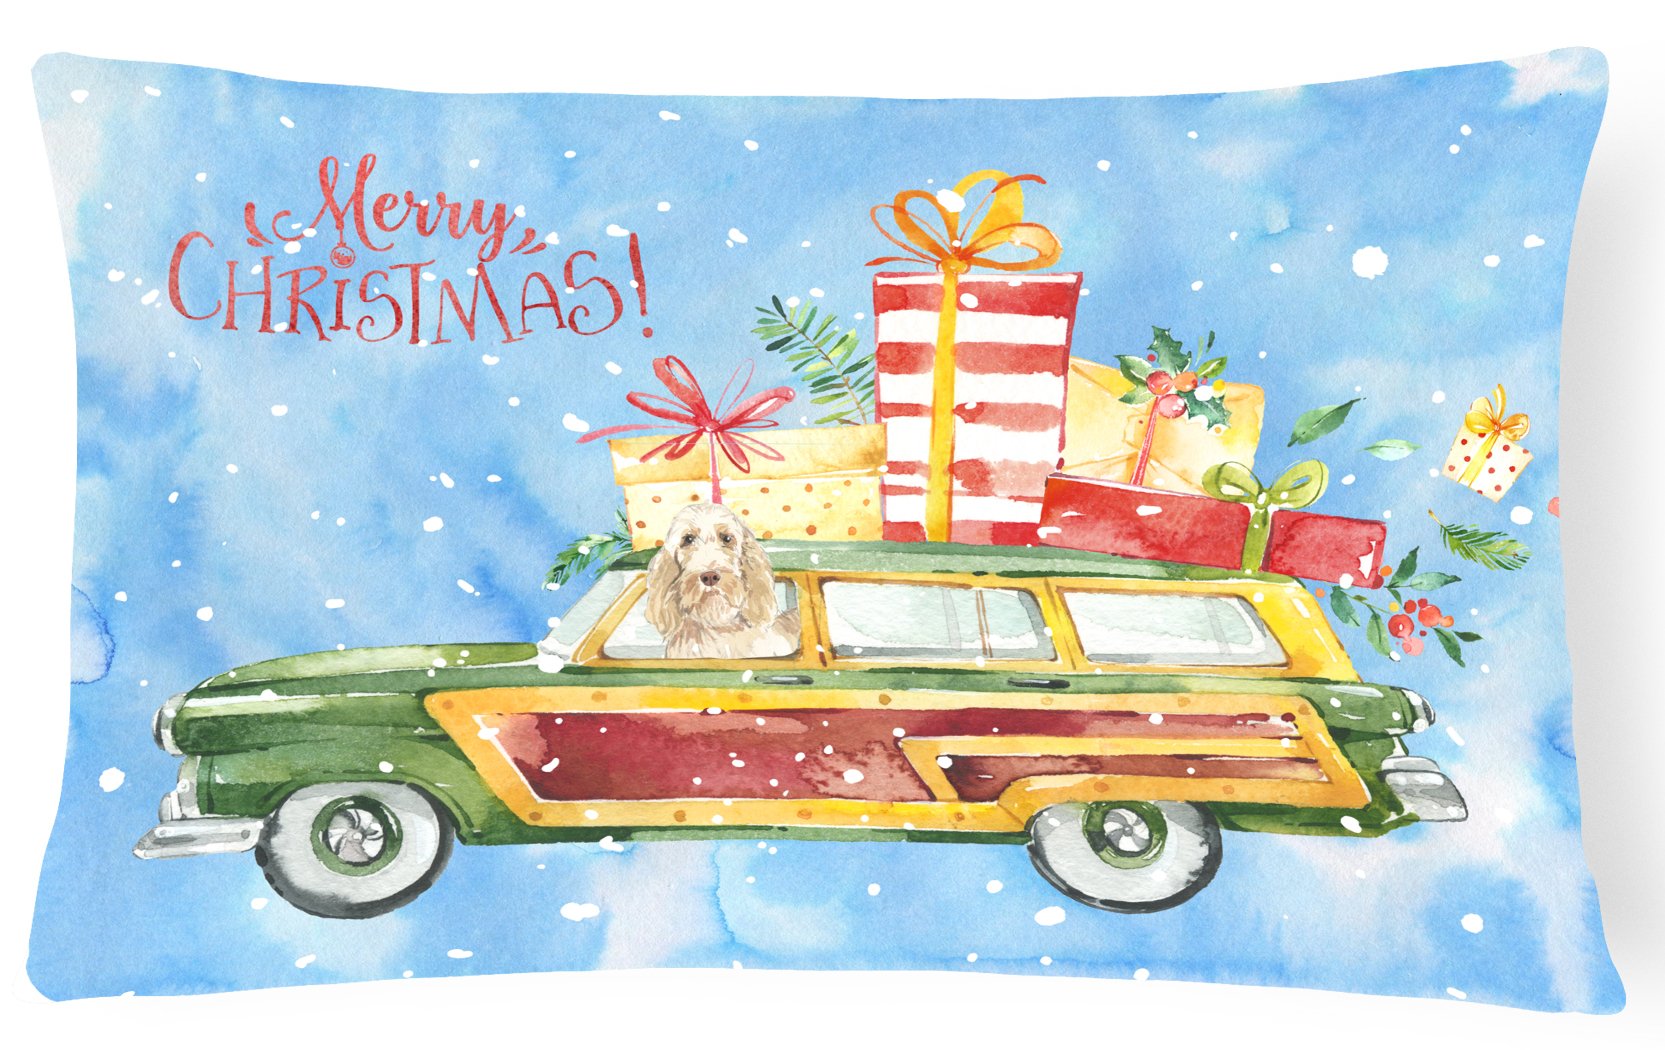 Merry Christmas Spinone Italiano Canvas Fabric Decorative Pillow CK2425PW1216 by Caroline's Treasures